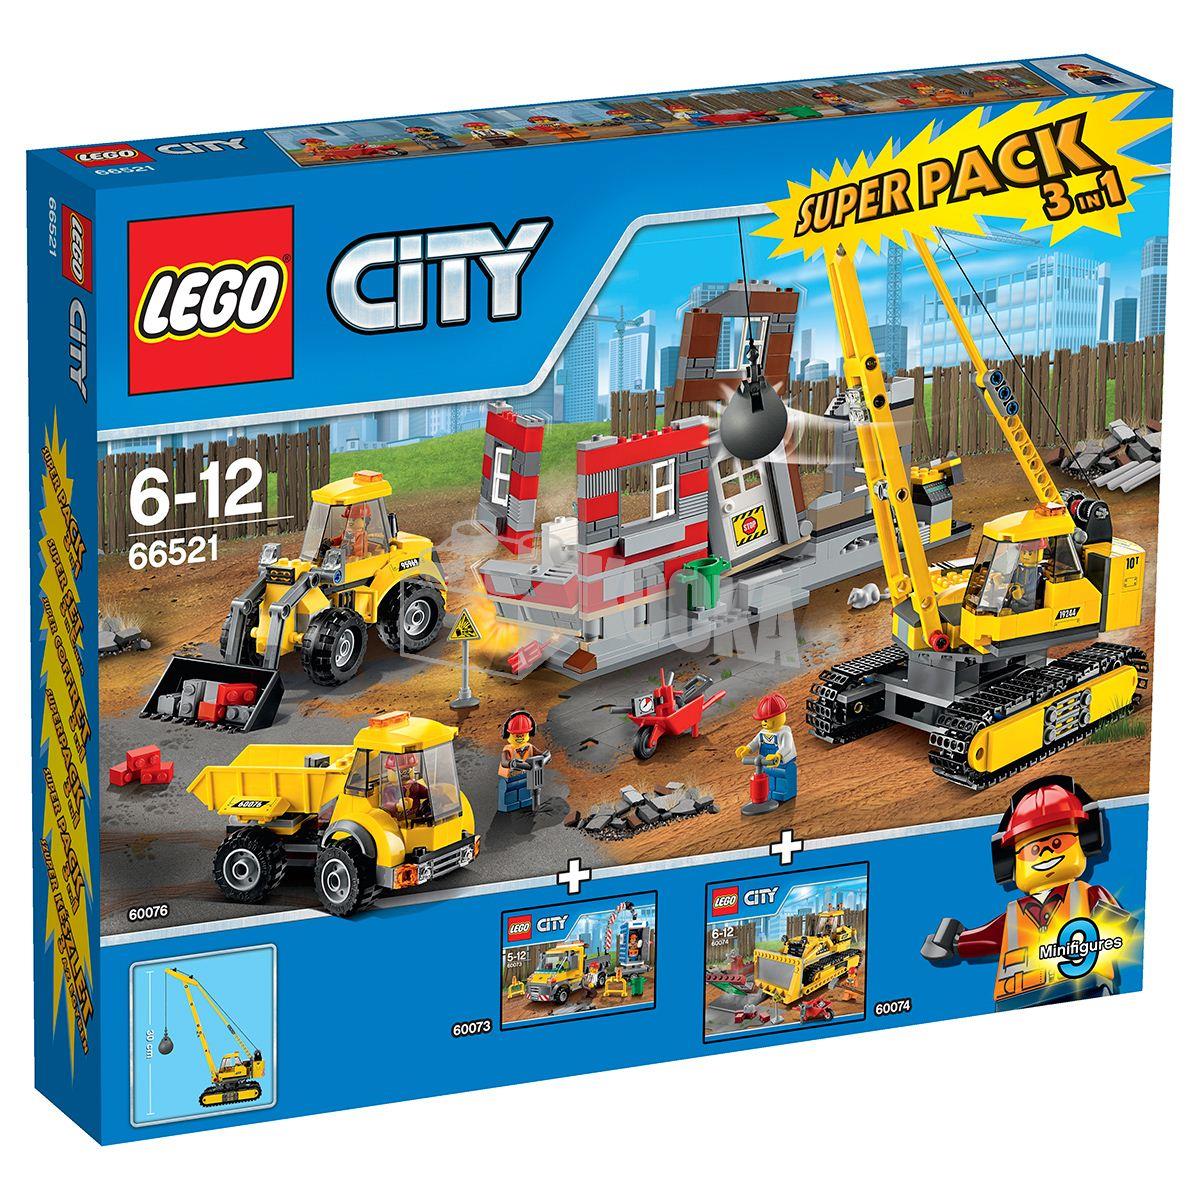 Styring Martin Luther King Junior Vibrere LEGO 66521 City Demolition Super Pack | BrickEconomy